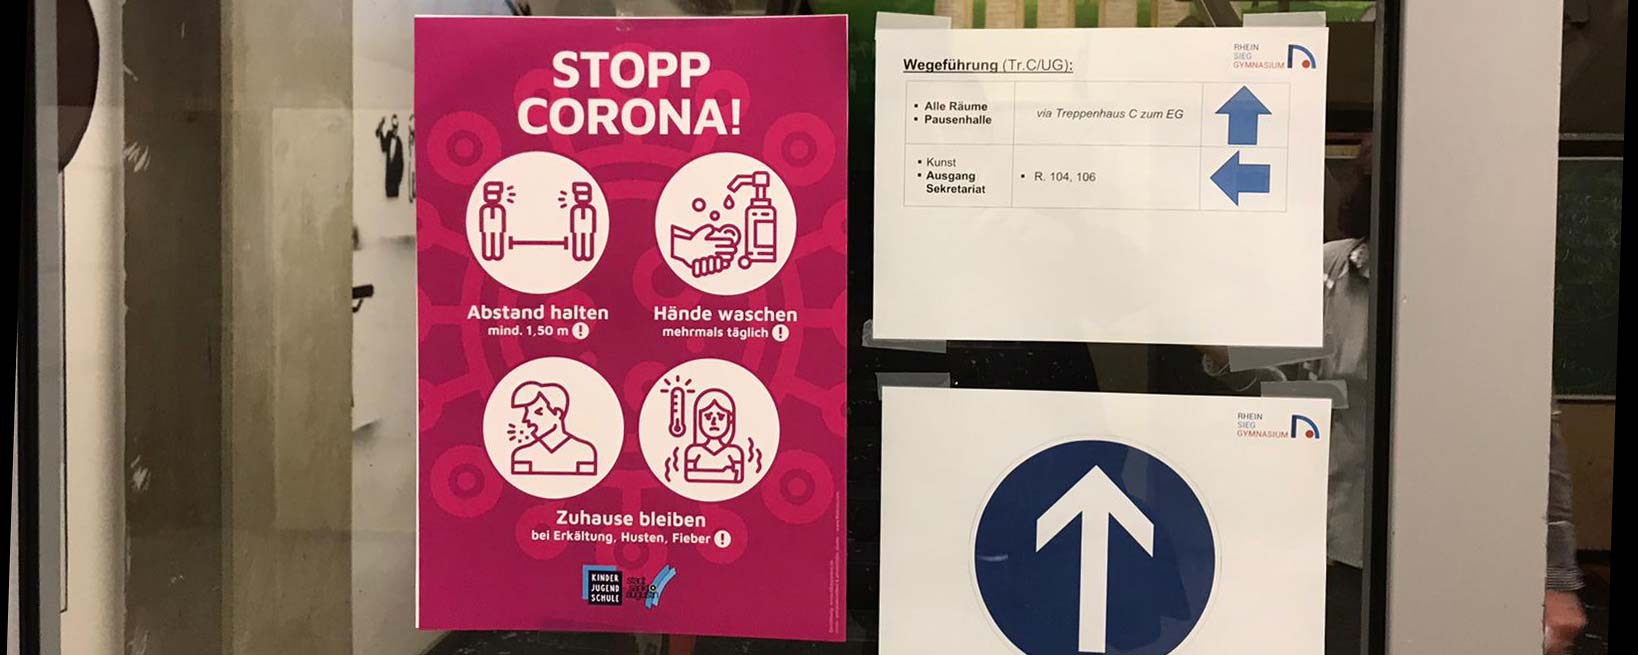 Plakat Corona Hygienemassnahmen mit Icons für AHA-Regeln